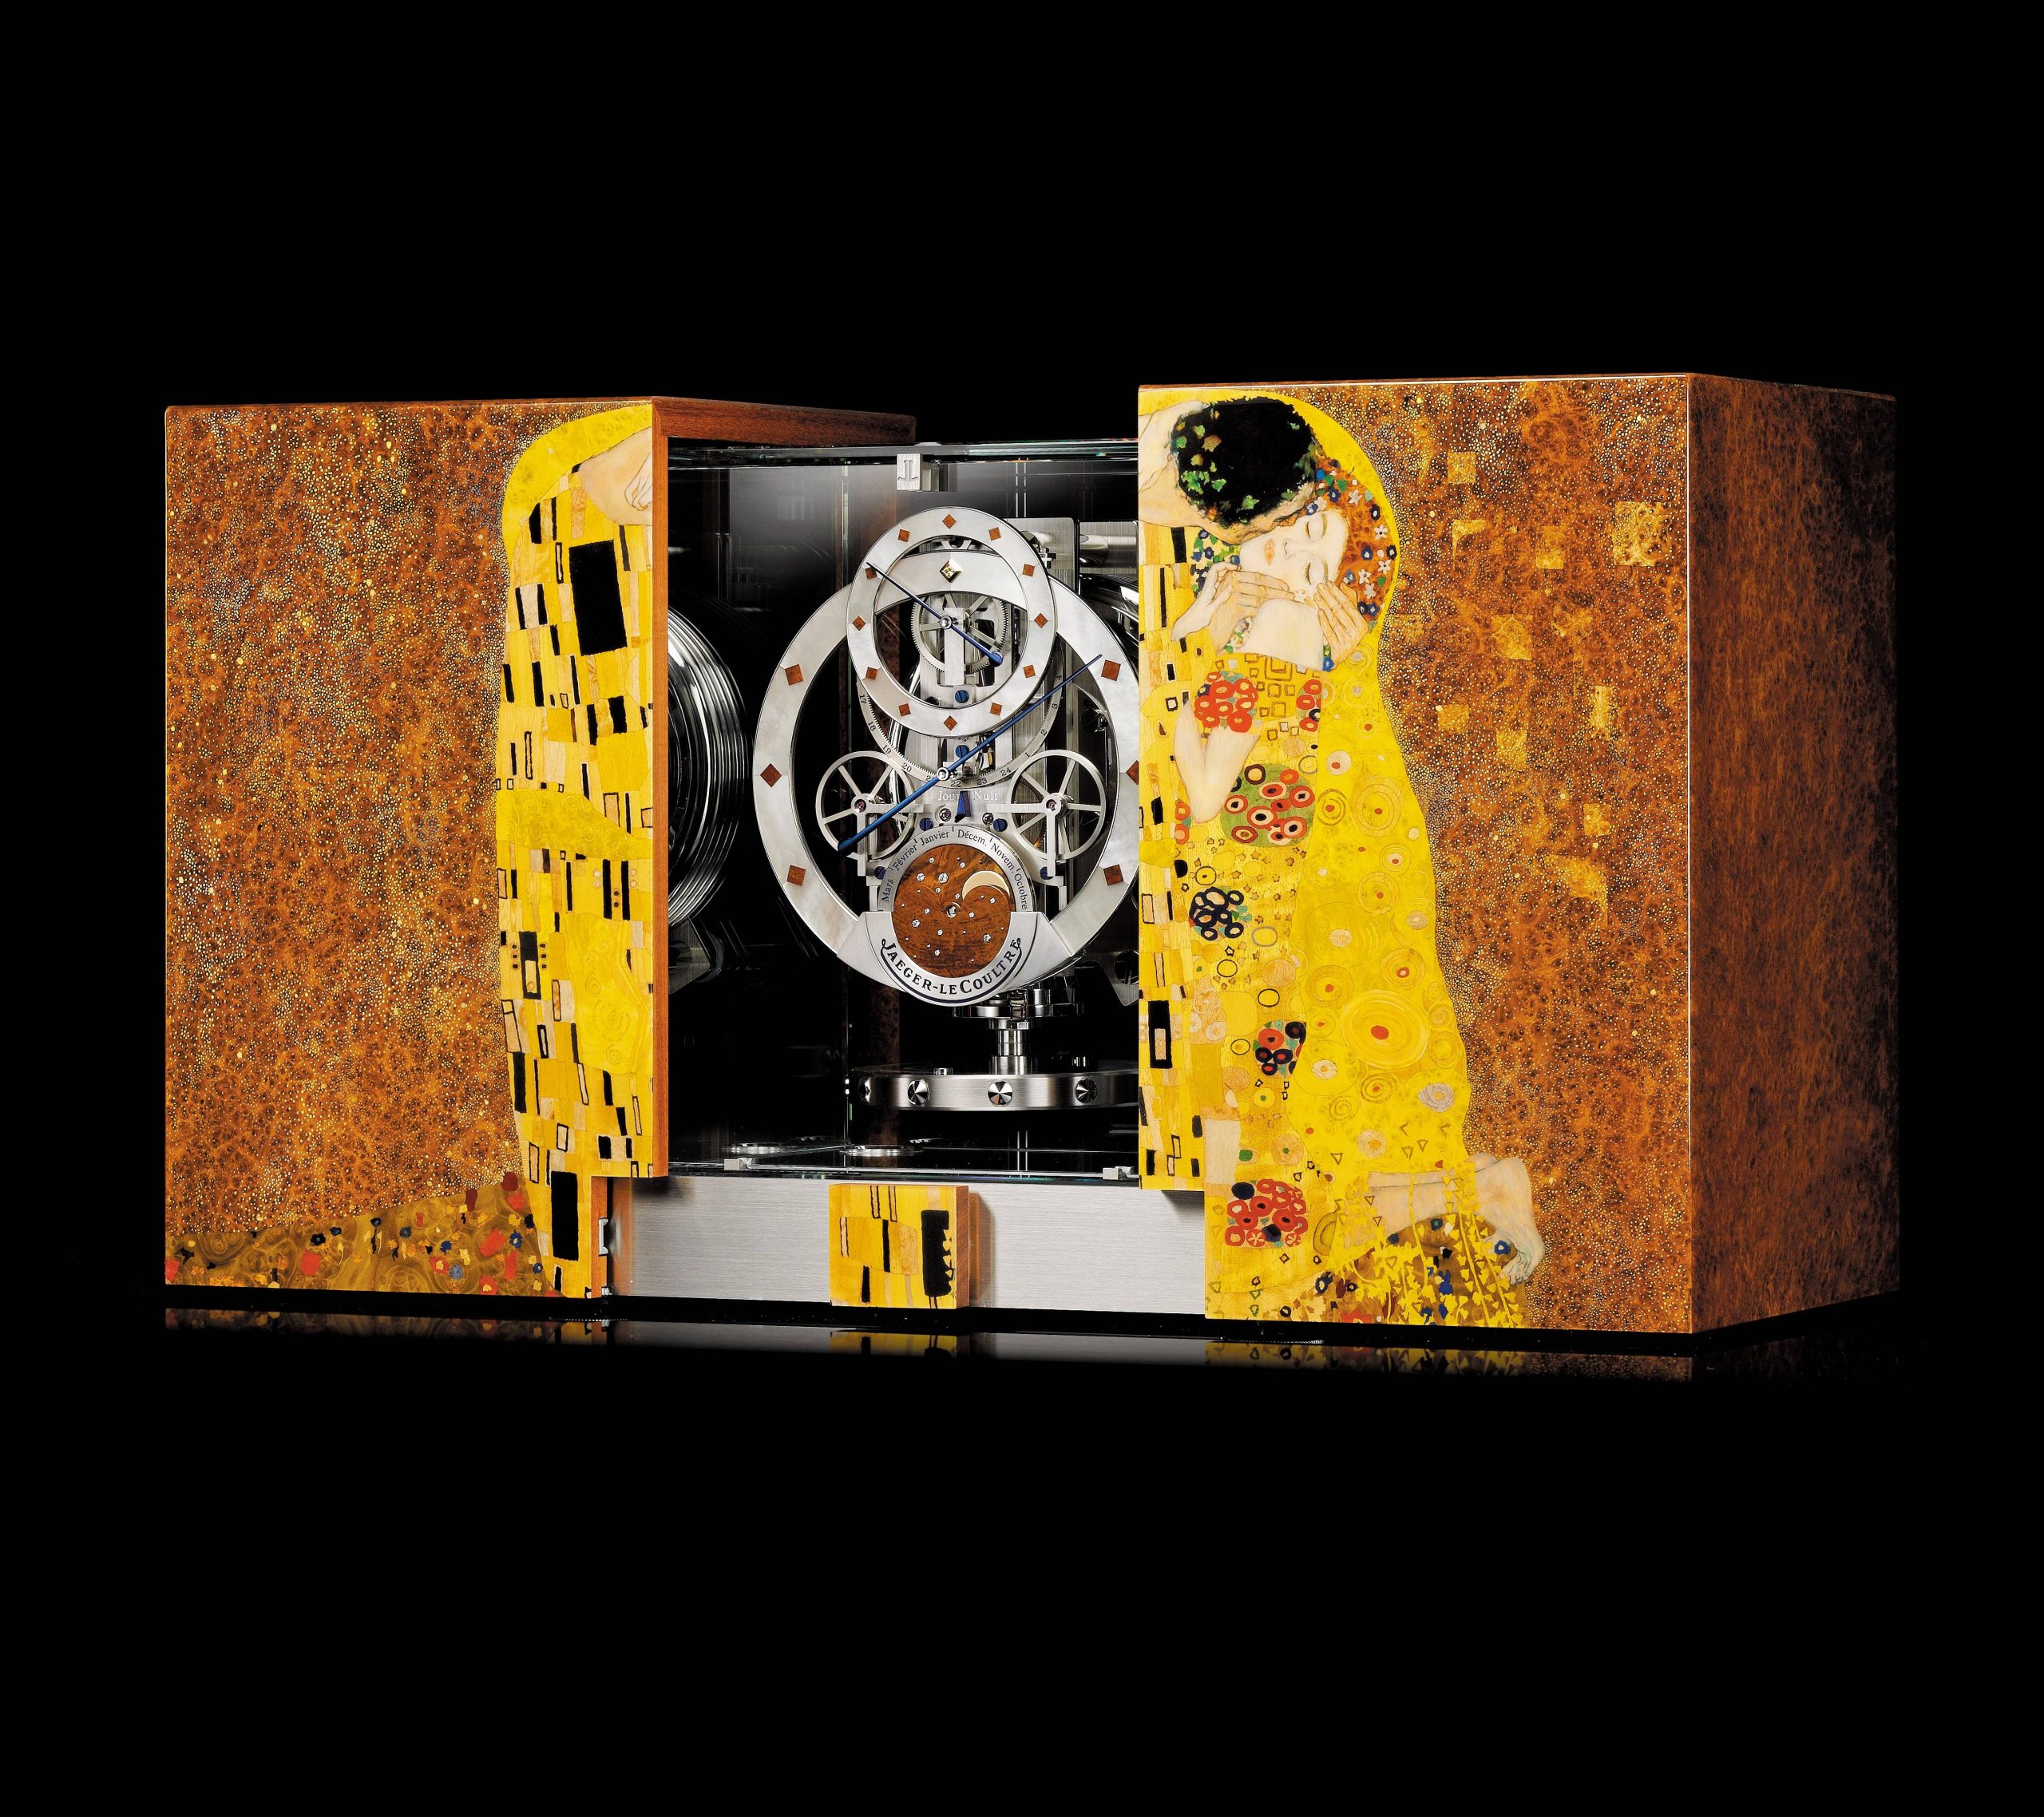 Jaeger-LeCoultre Celebrate Klimt’s Famous “Kiss” With Atmos Marqueterie Clock